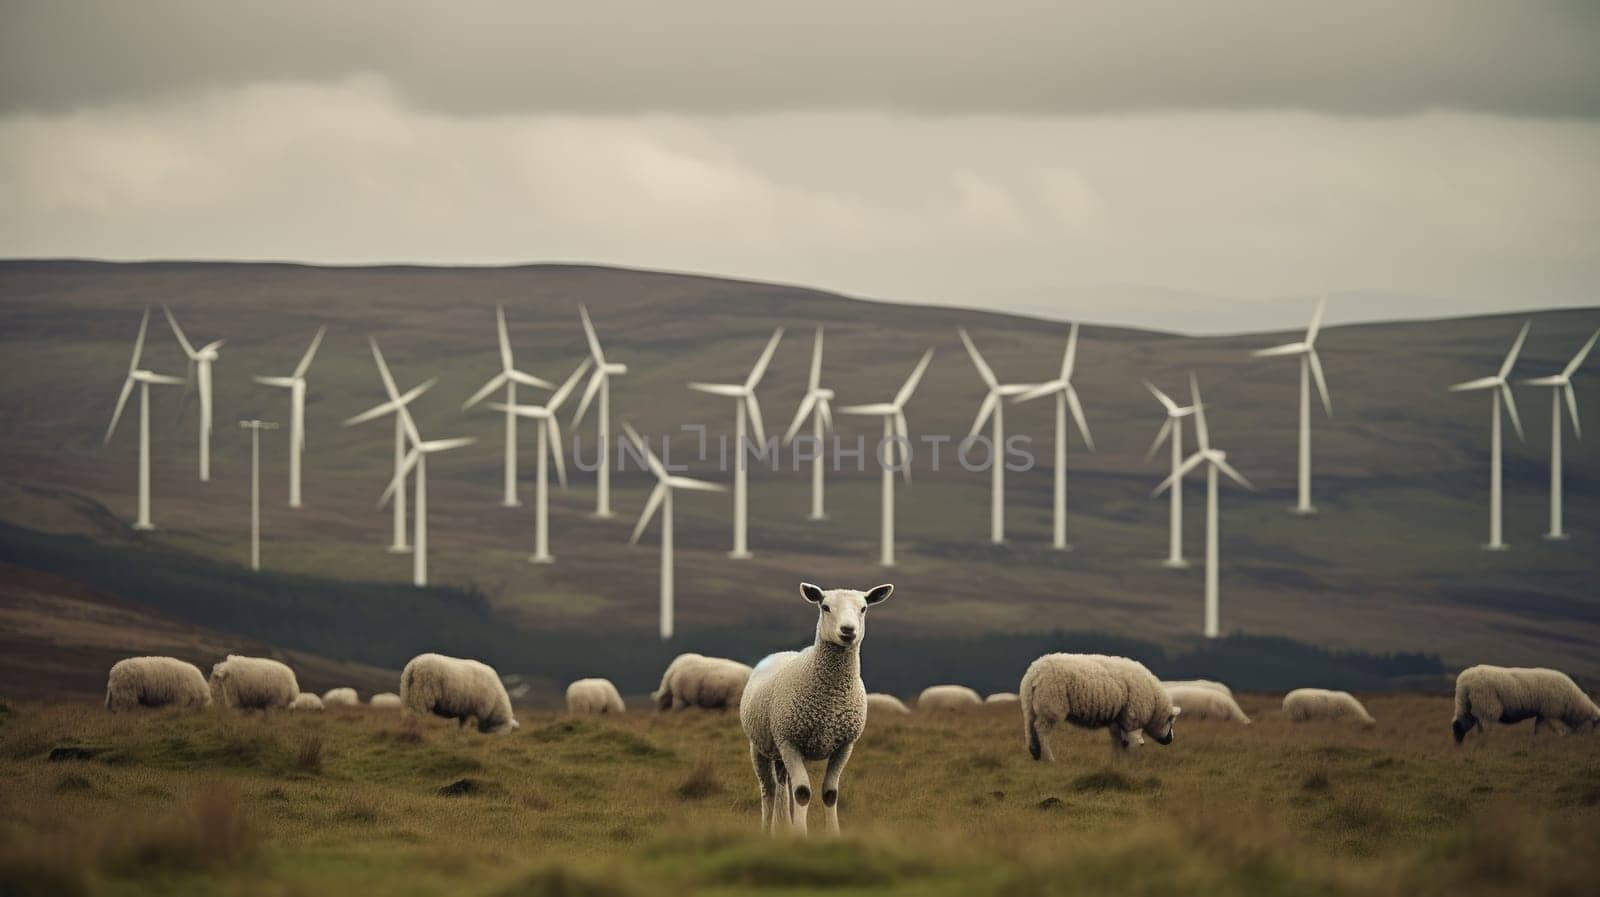 Sheep grazing near wind turbines on the mountain. Generative AI.